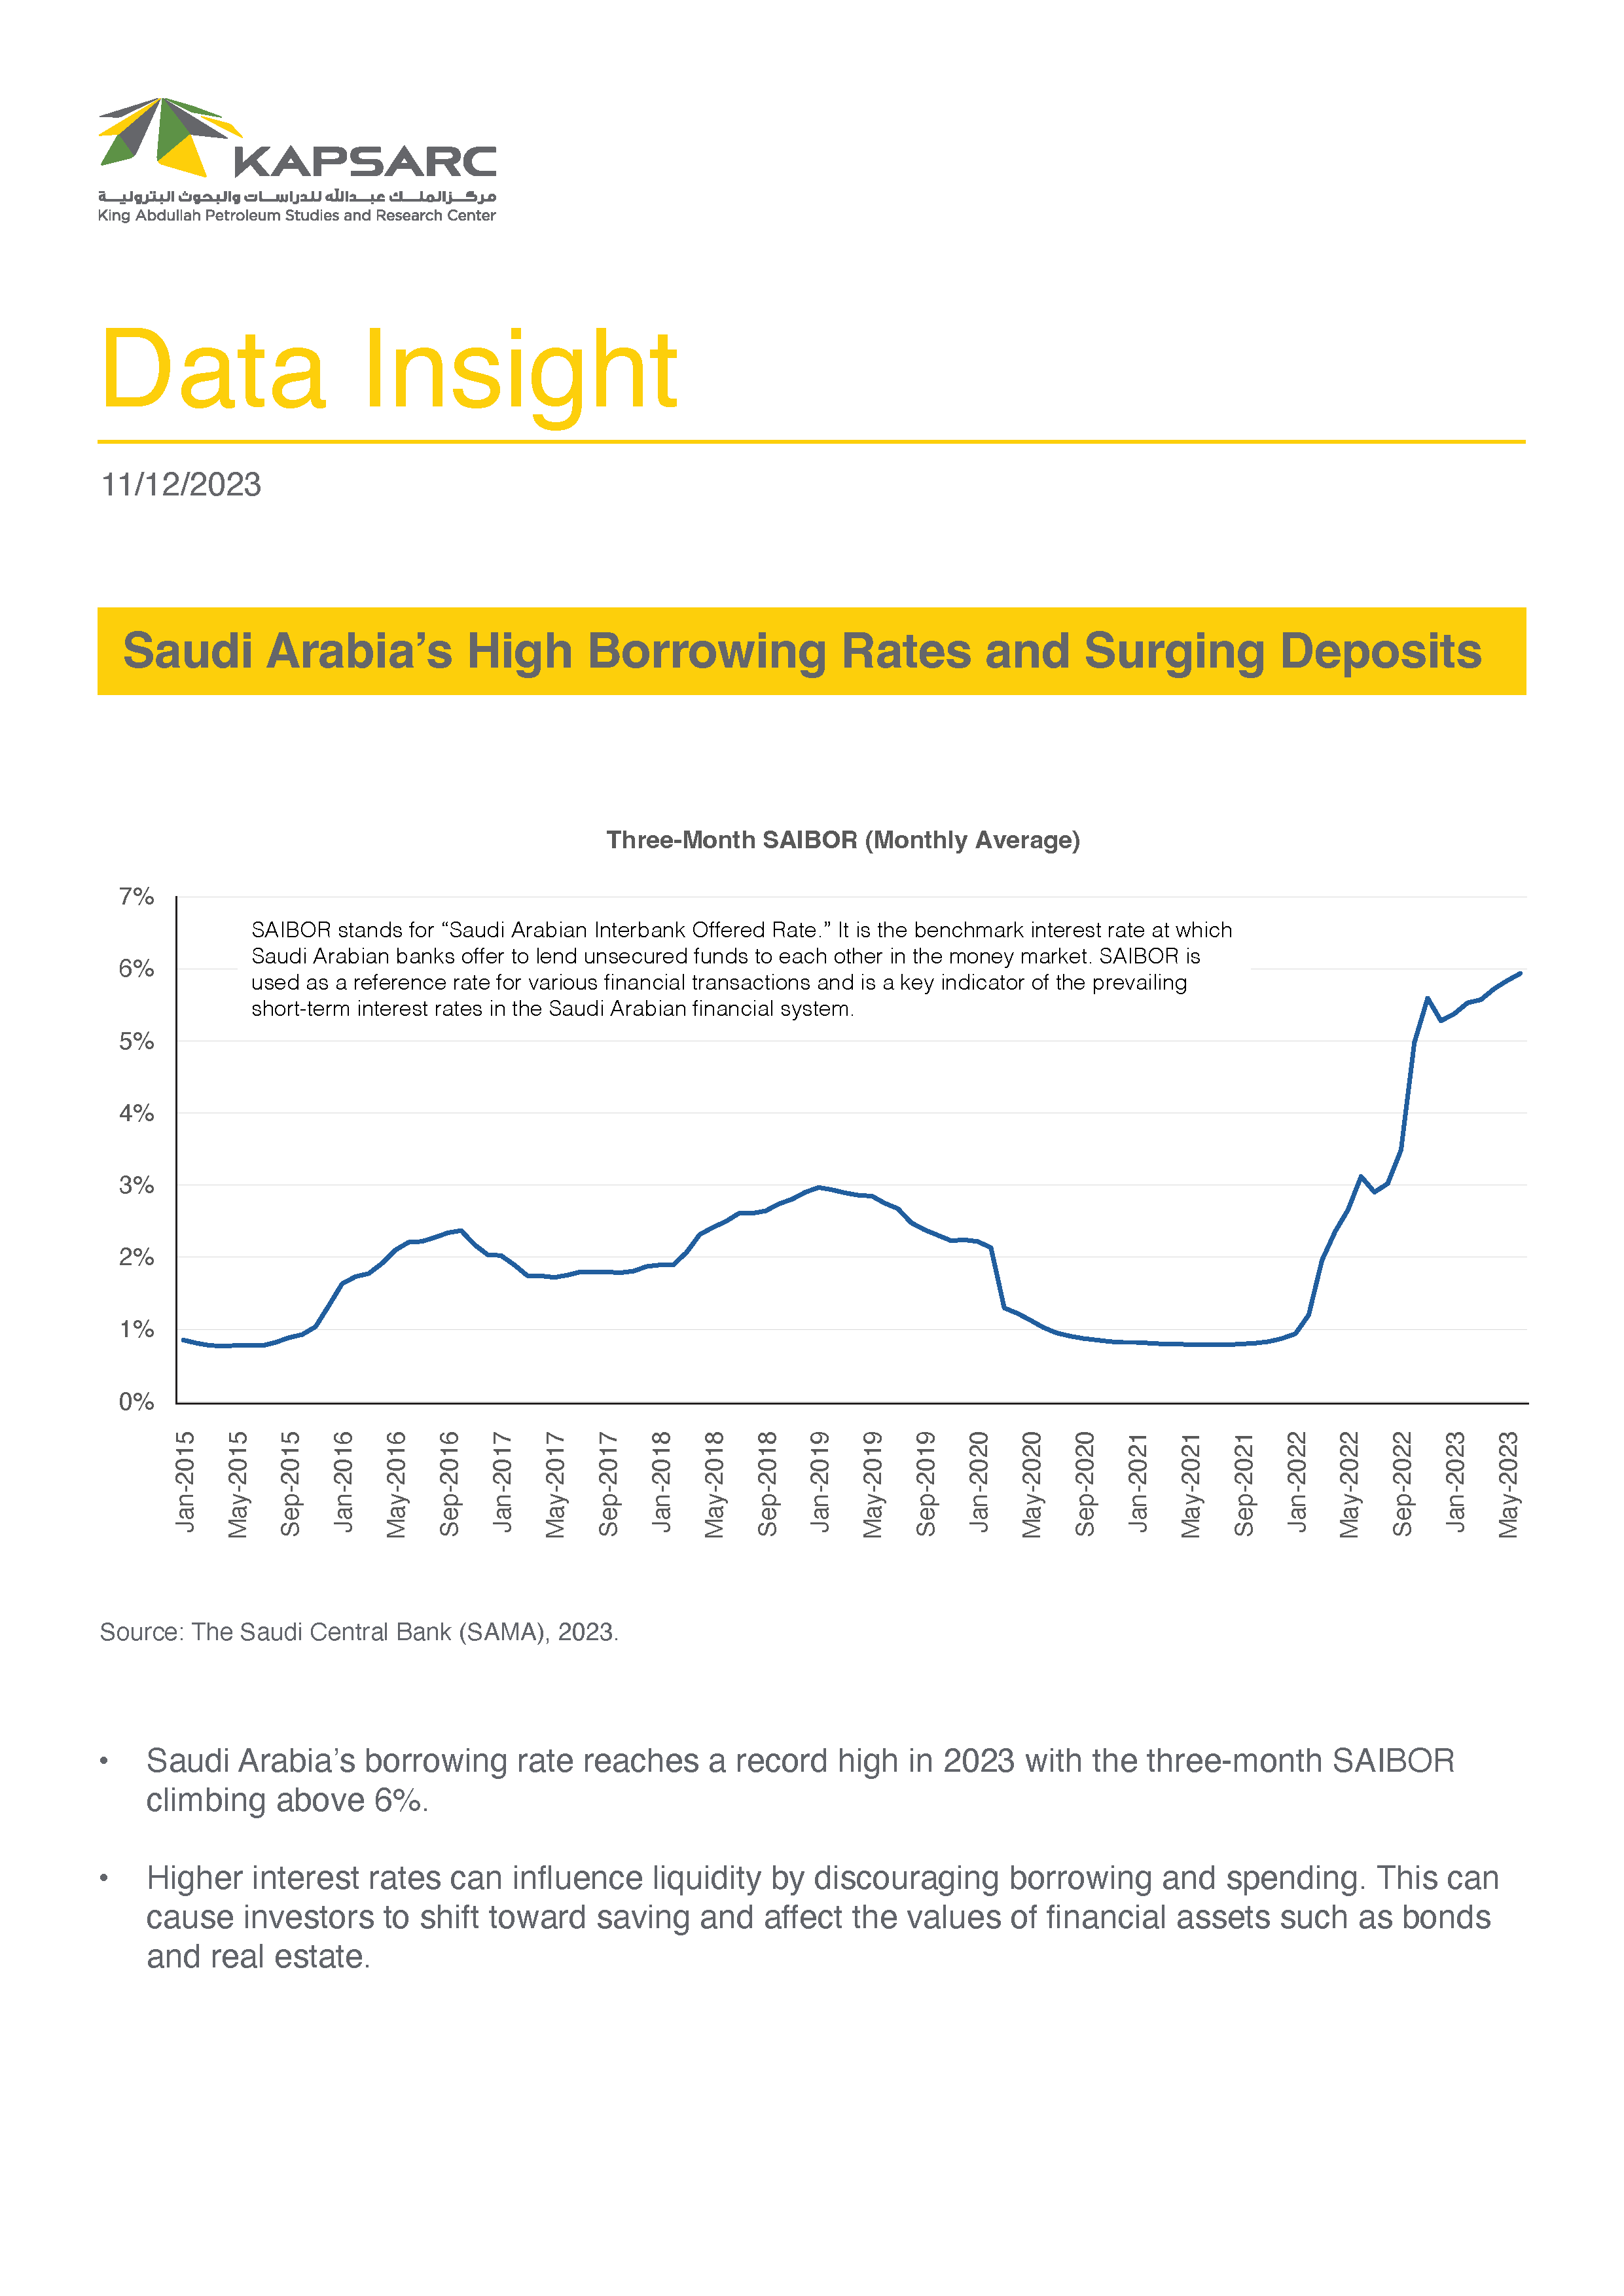 Saudi Arabia’s High Borrowing Rates and Surging Deposits